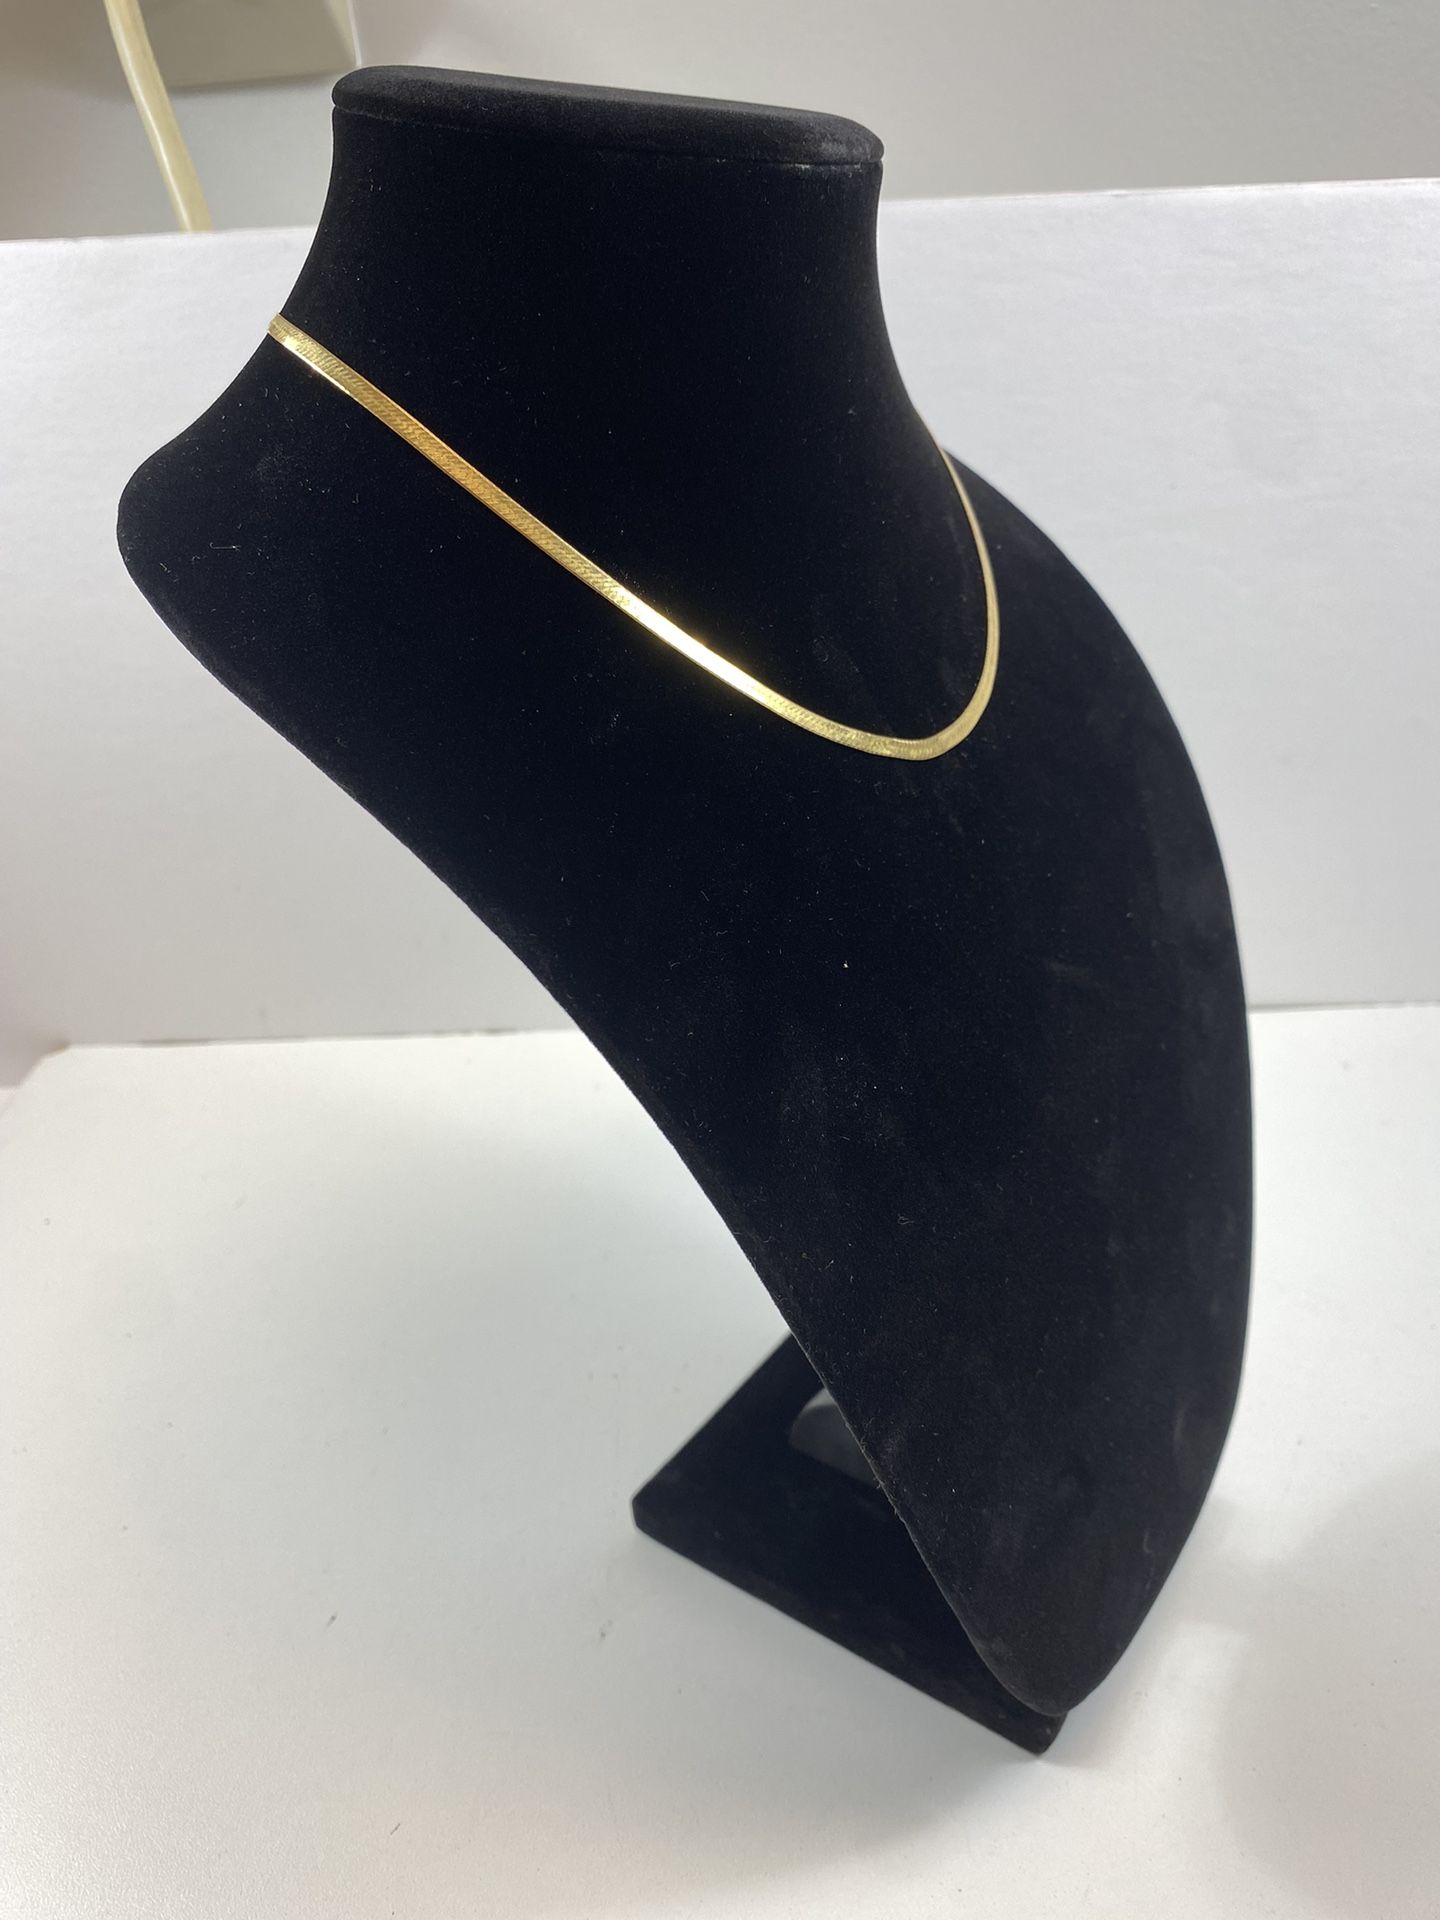 Solid 14kt 18” Italian yellow gold herringbone necklace 